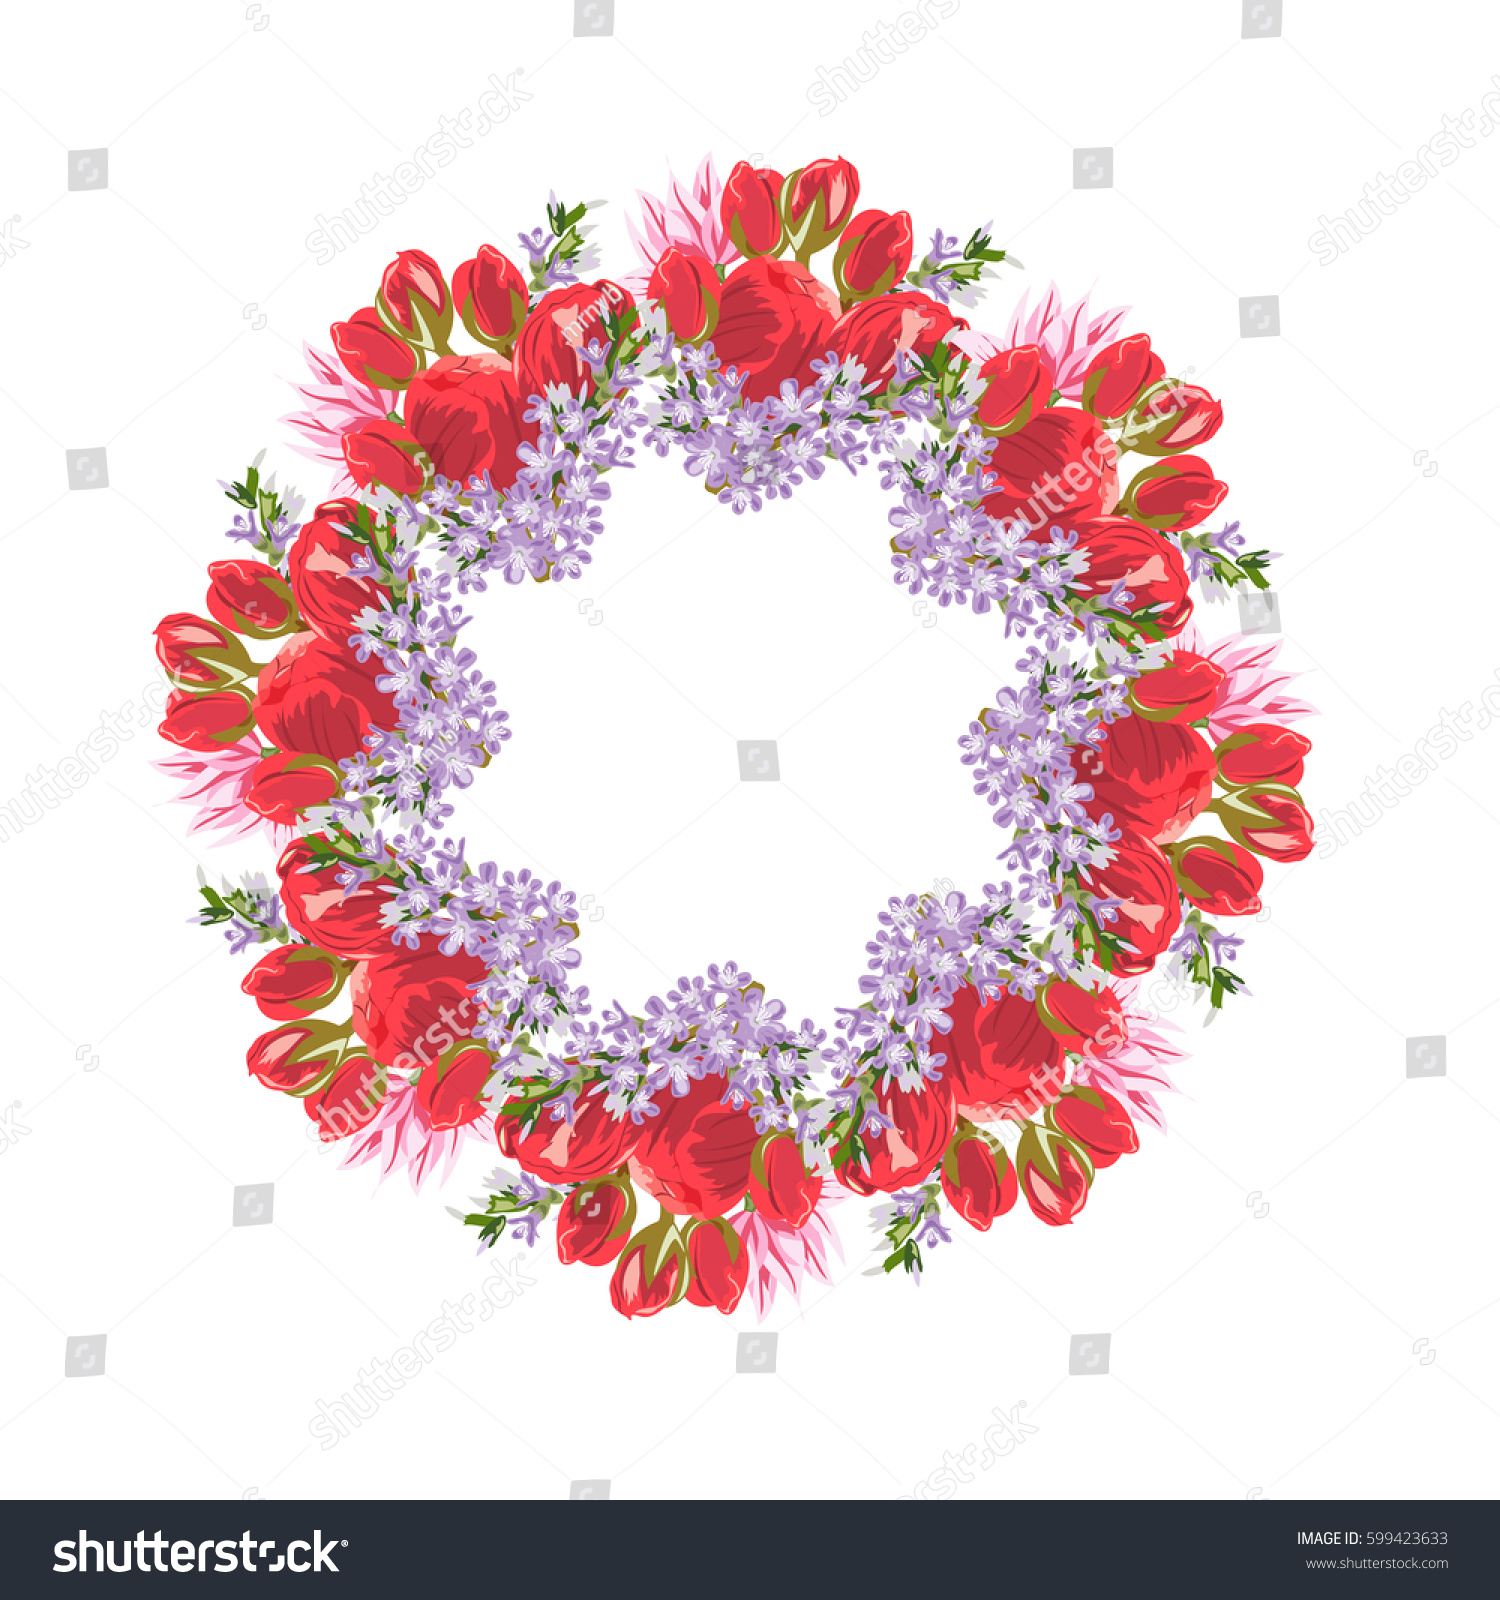 Edit Vectors Free Online - Beautiful floral | Shutterstock Editor